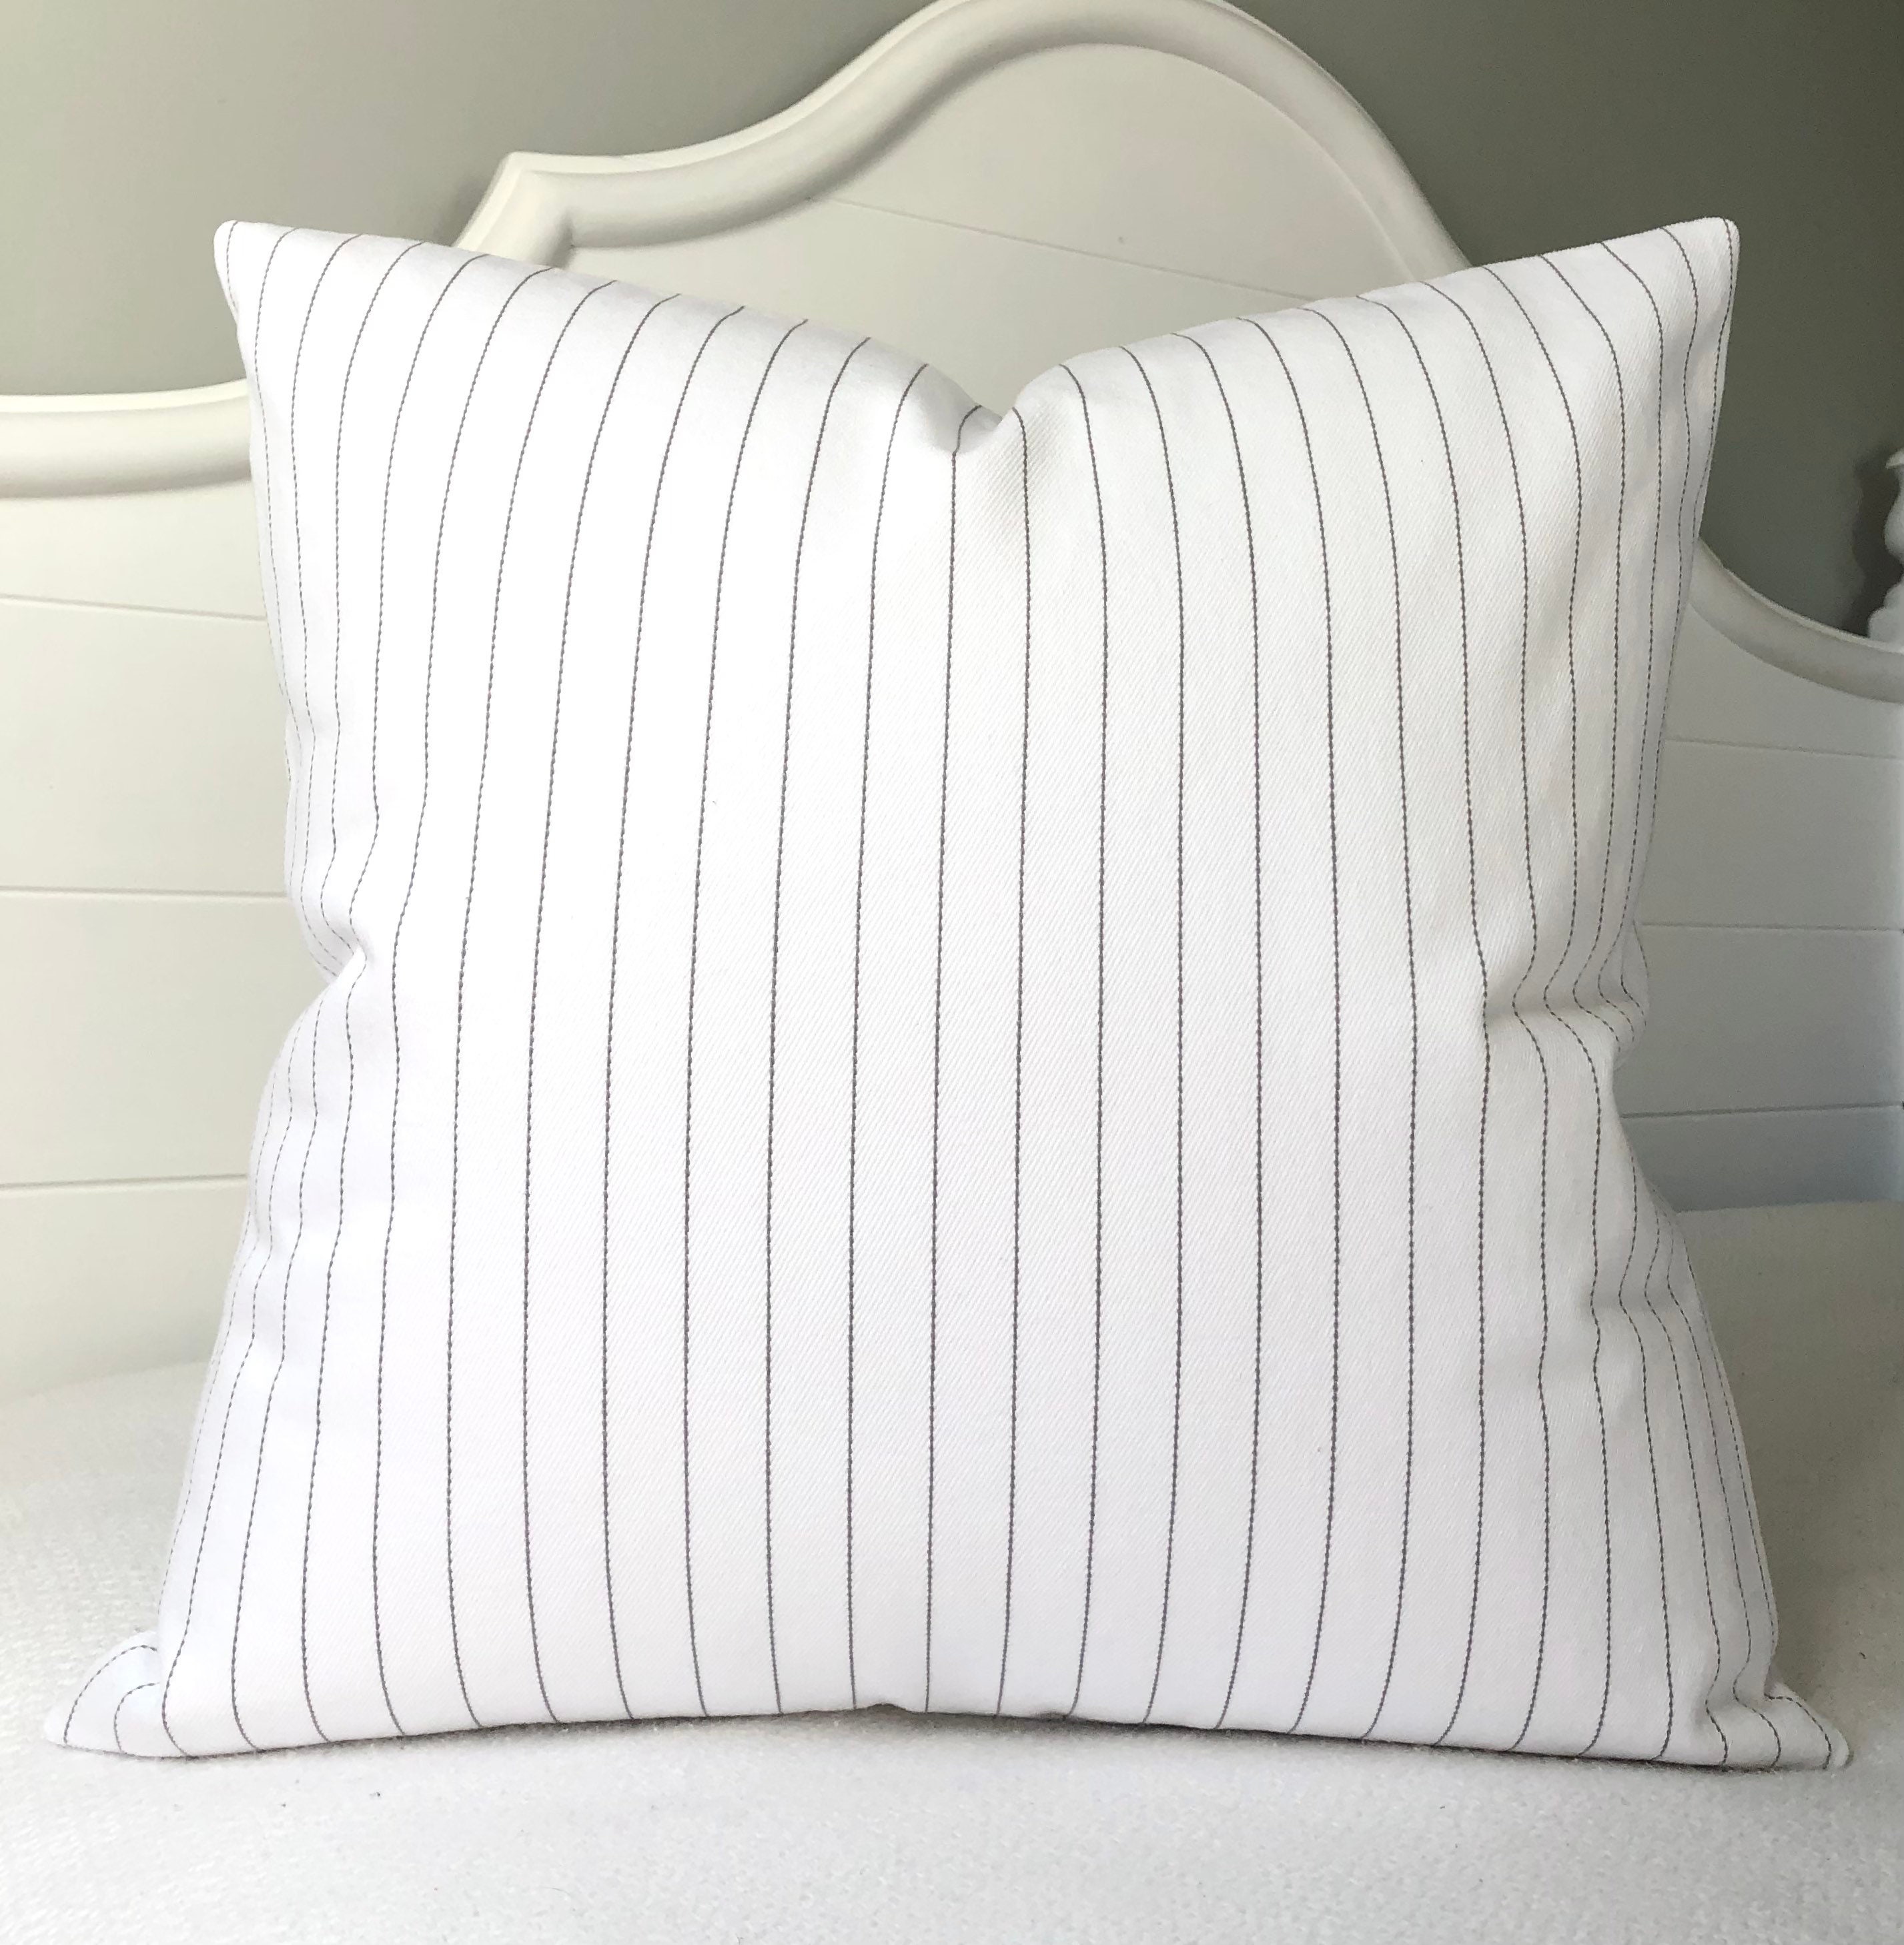 Baseball - Style 2: Pinstripe Bambino – Big League Pillows